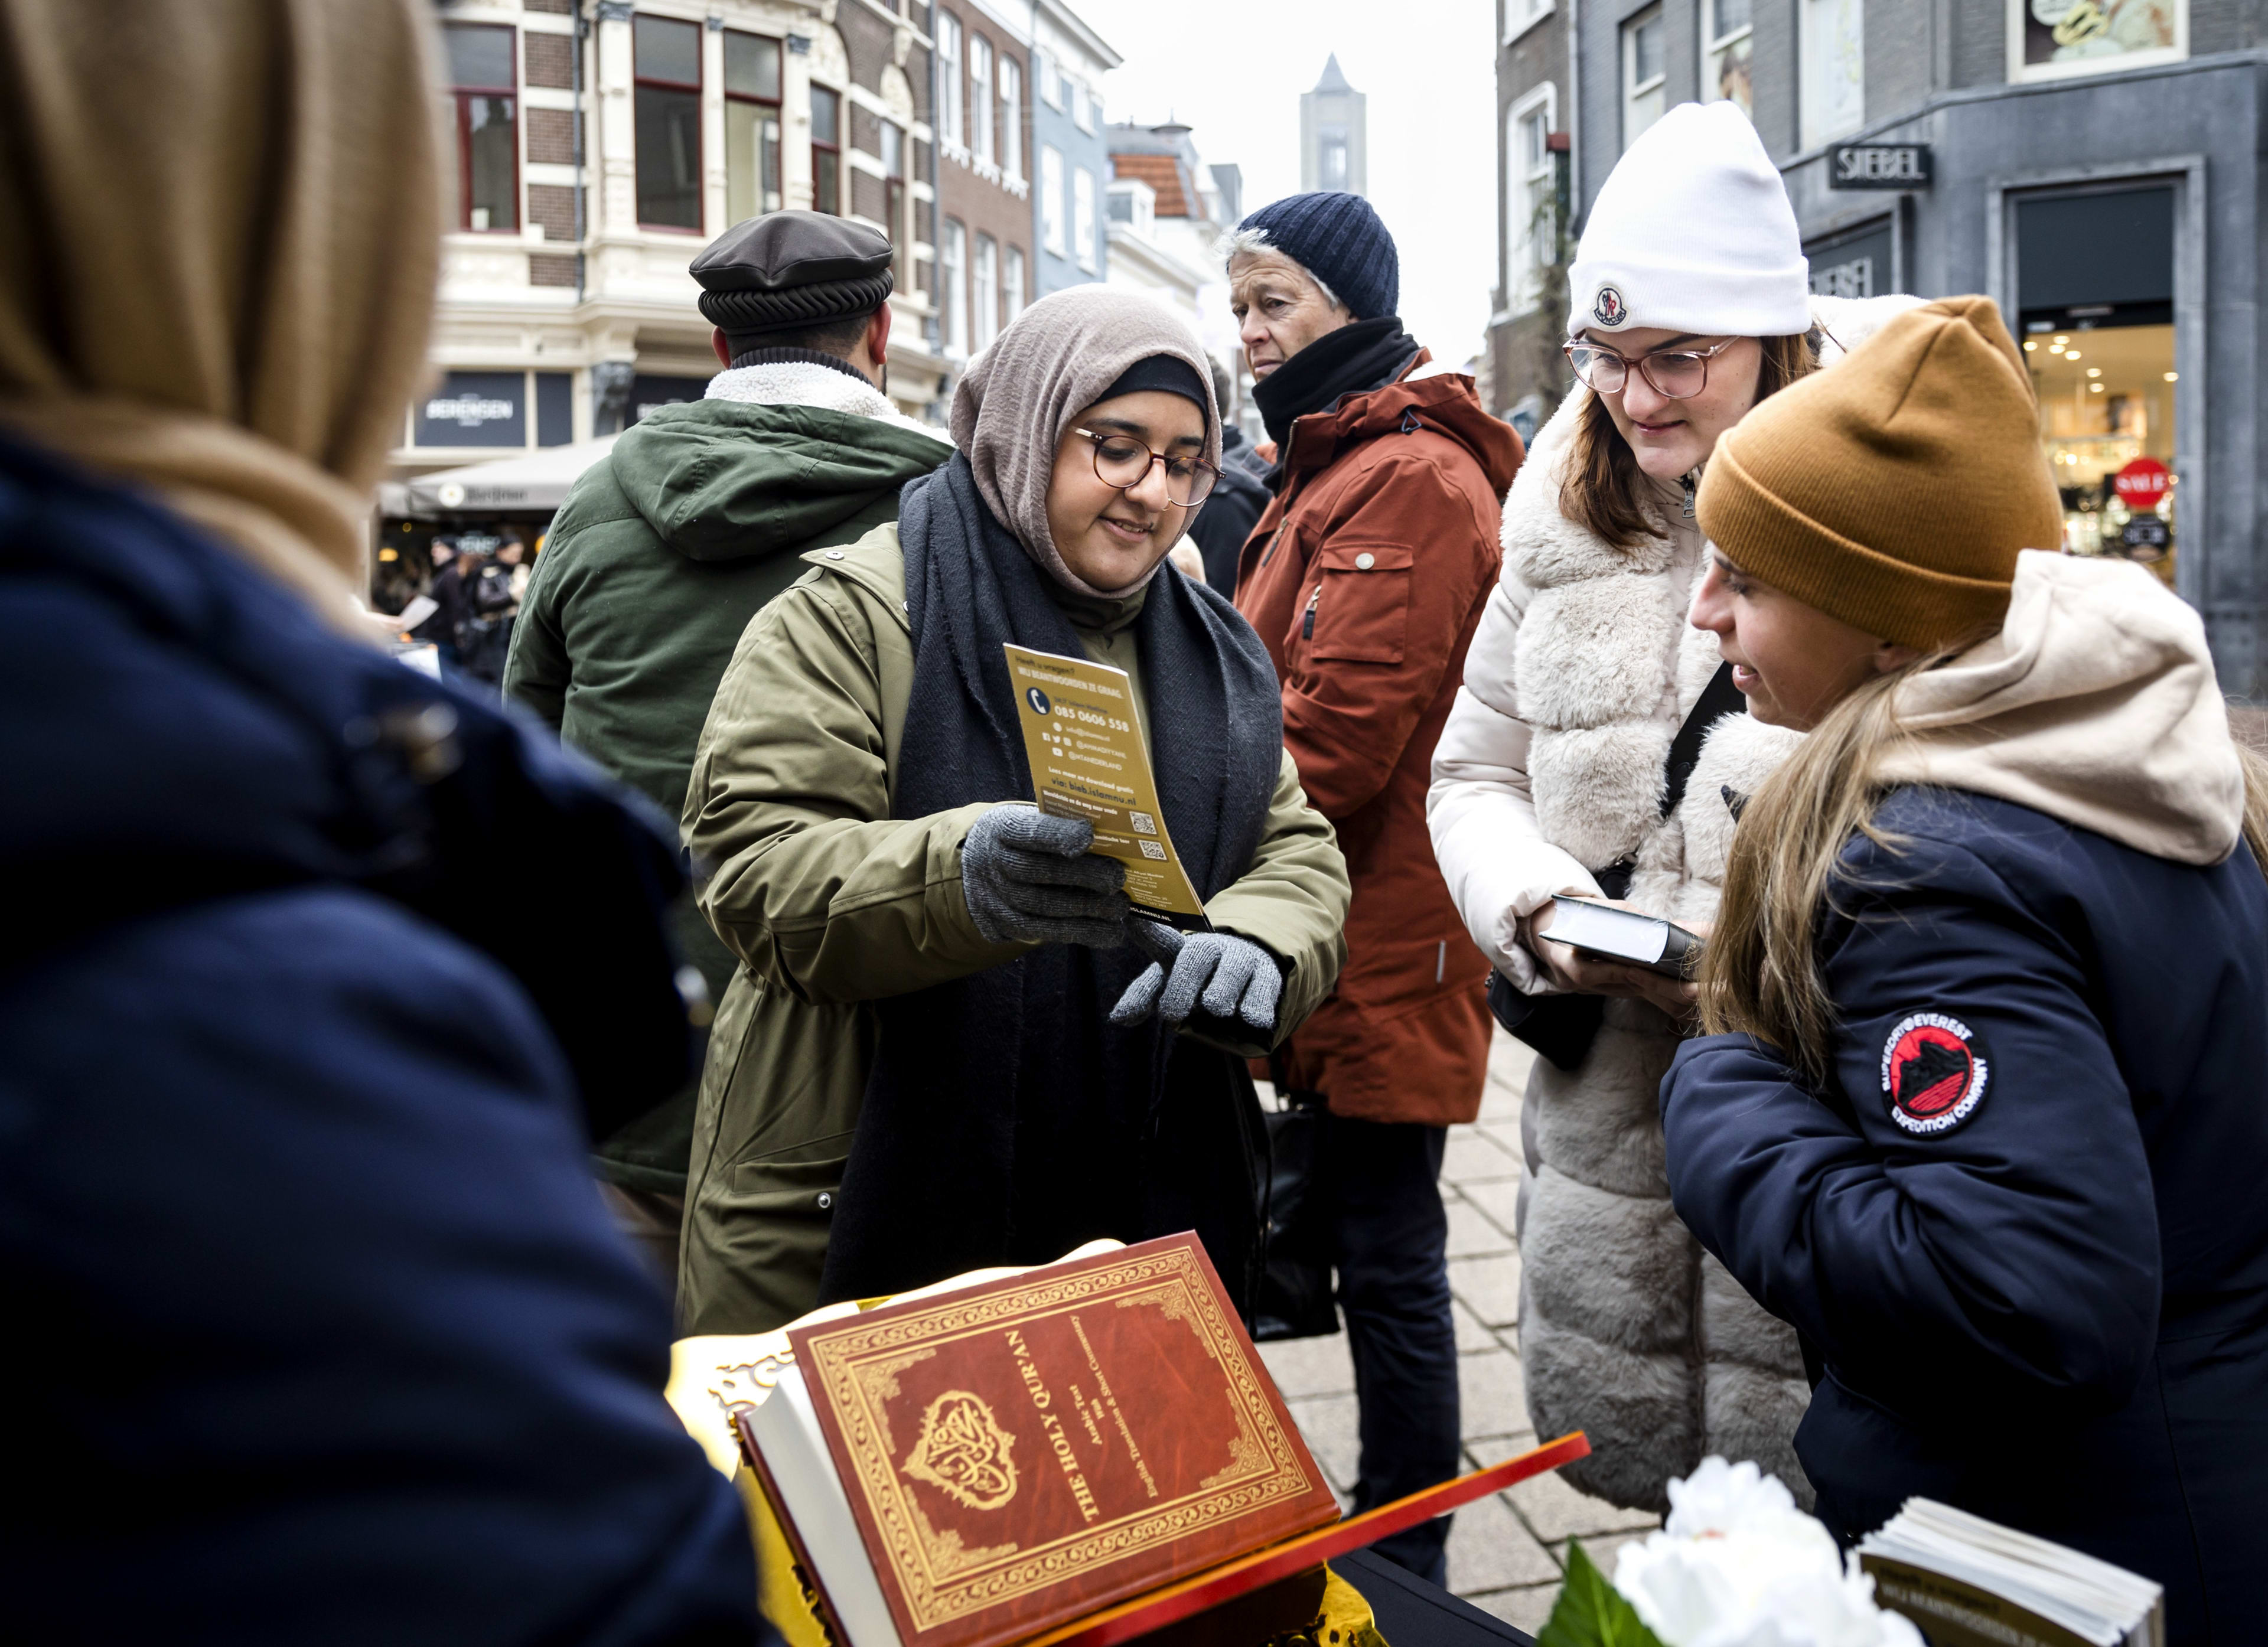 Gratis korans uitgedeeld in Arnhem: 'Leverde mooie gesprekken op'